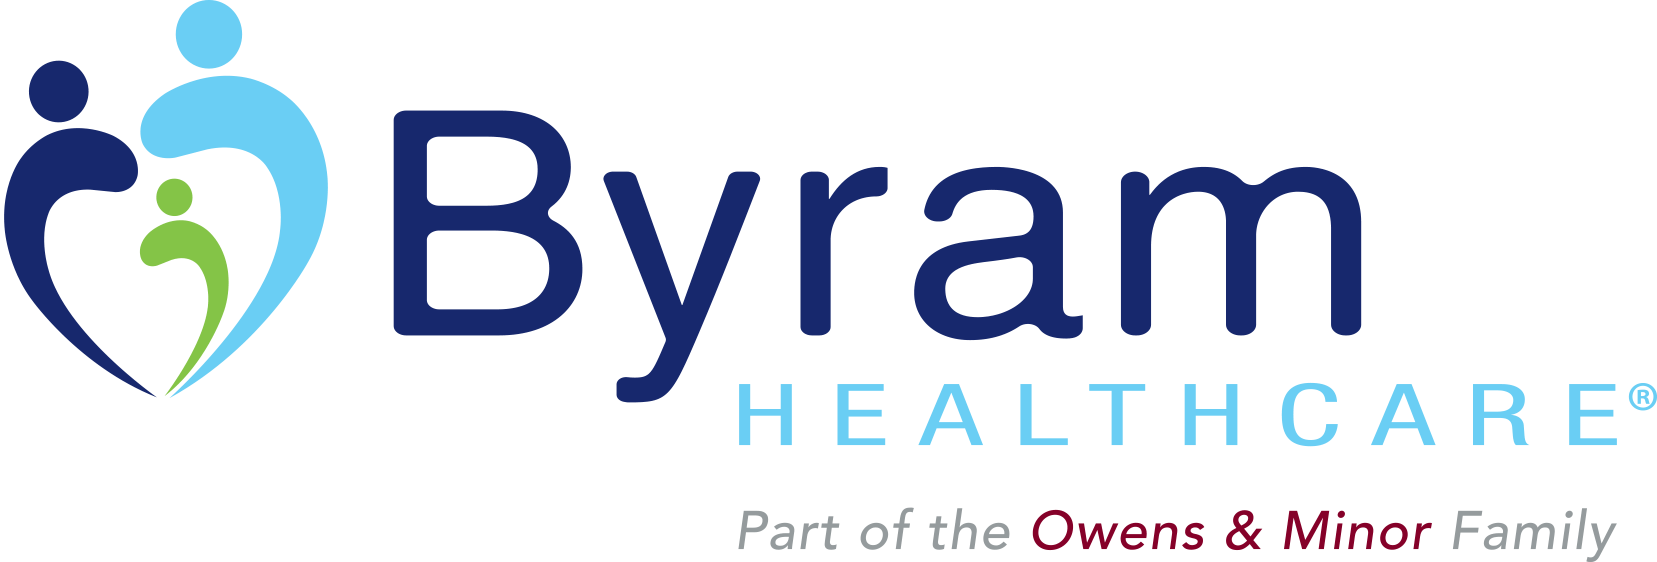 Health Care Blue Square Logo - Medical Supply Company | Home Medical Supplies | Byram Healthcare